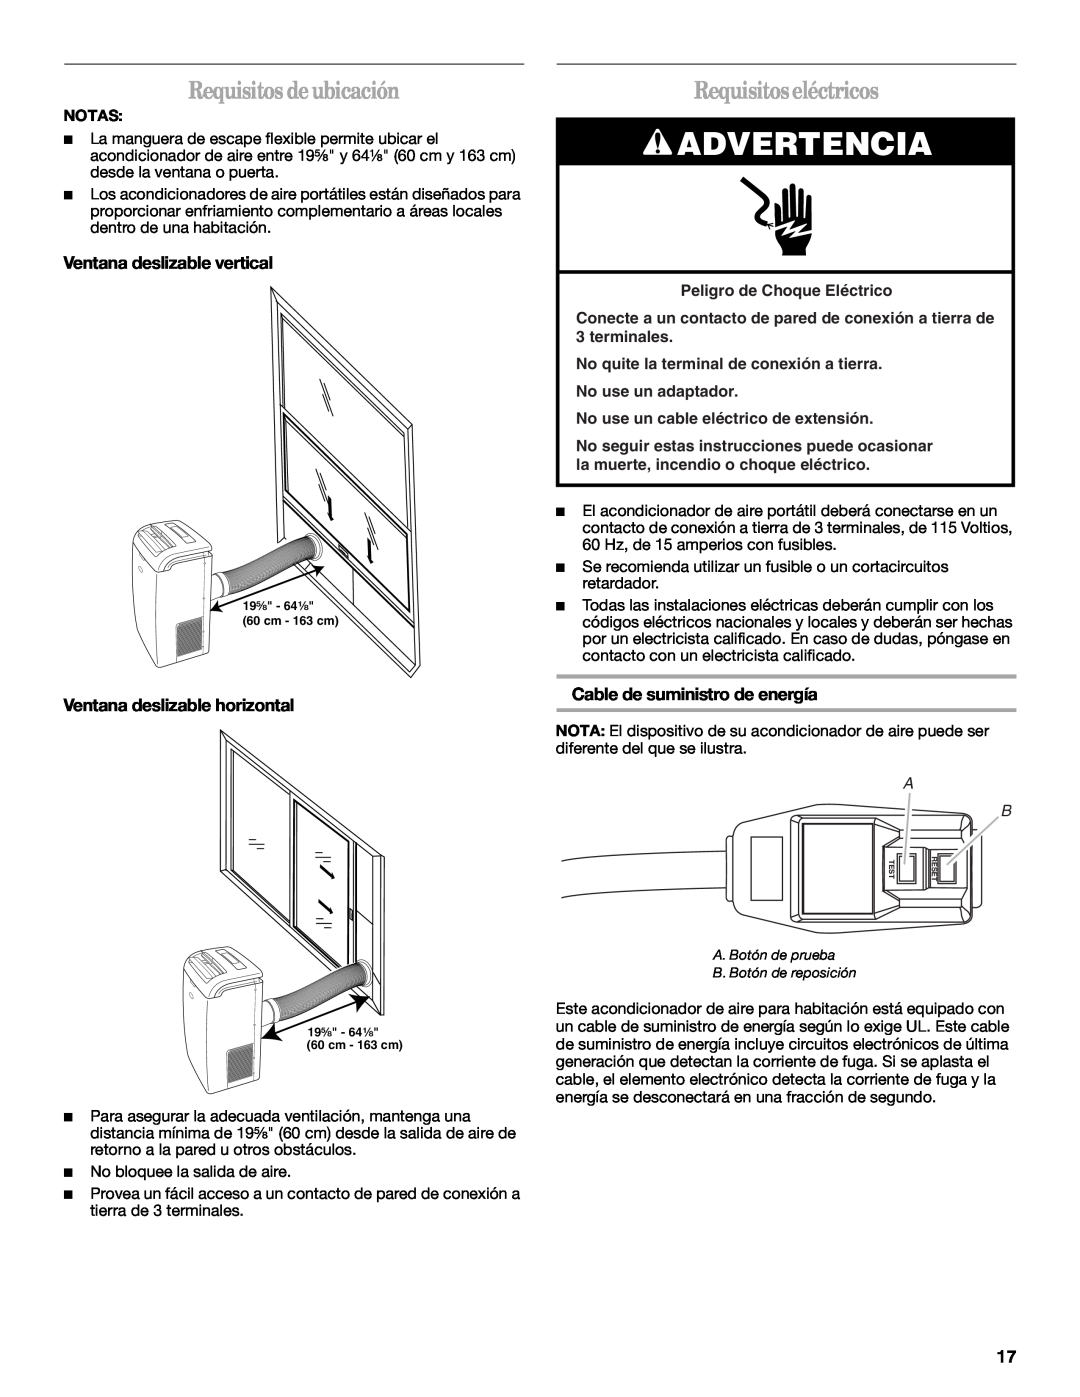 Whirlpool 1328891 manual Advertencia, Requisitosdeubicación, Requisitoseléctricos, Ventana deslizable vertical 